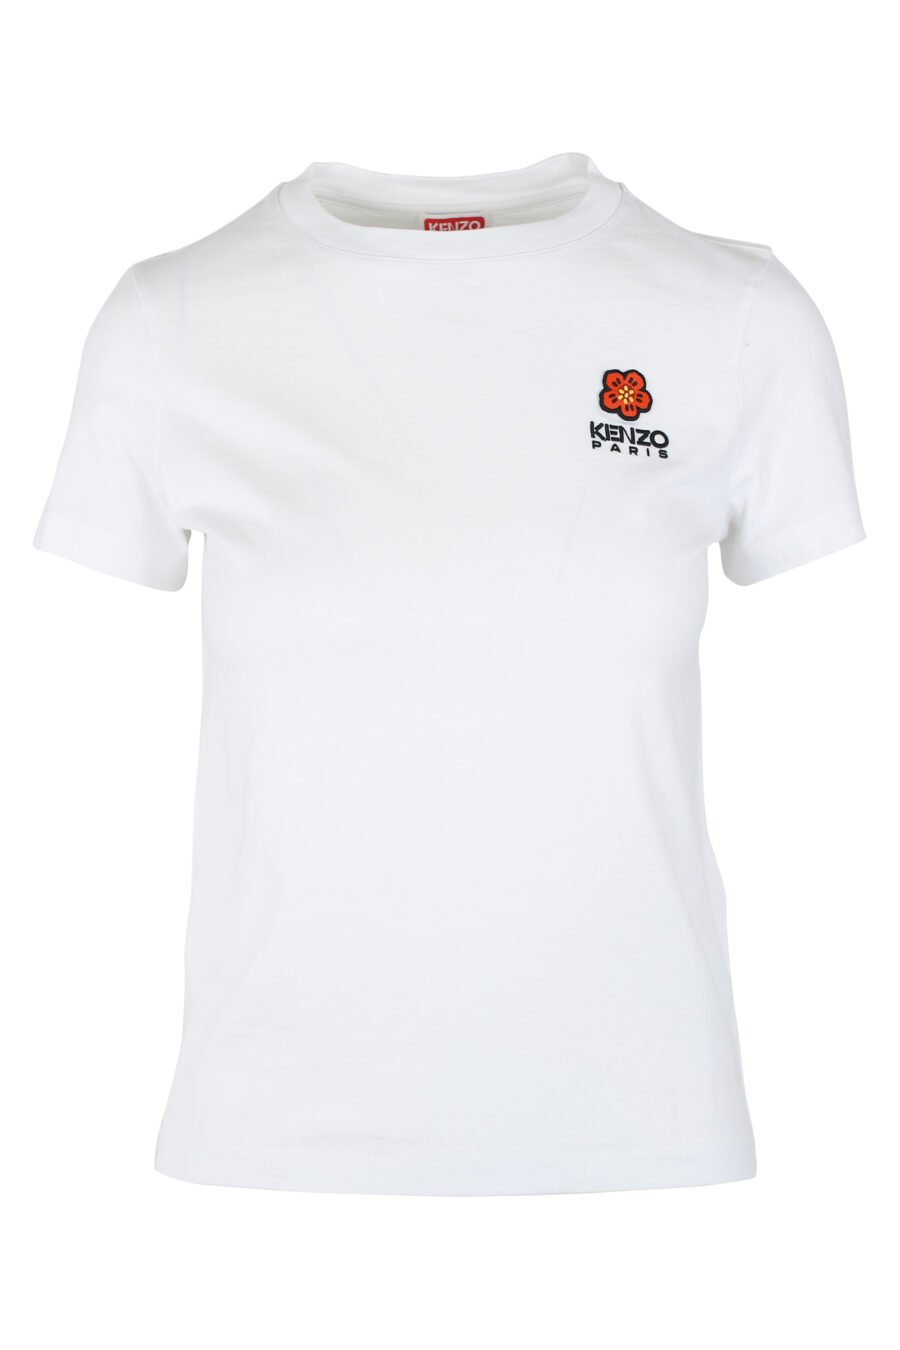 Weißes T-Shirt mit rotem Minilogue - IMG 9526